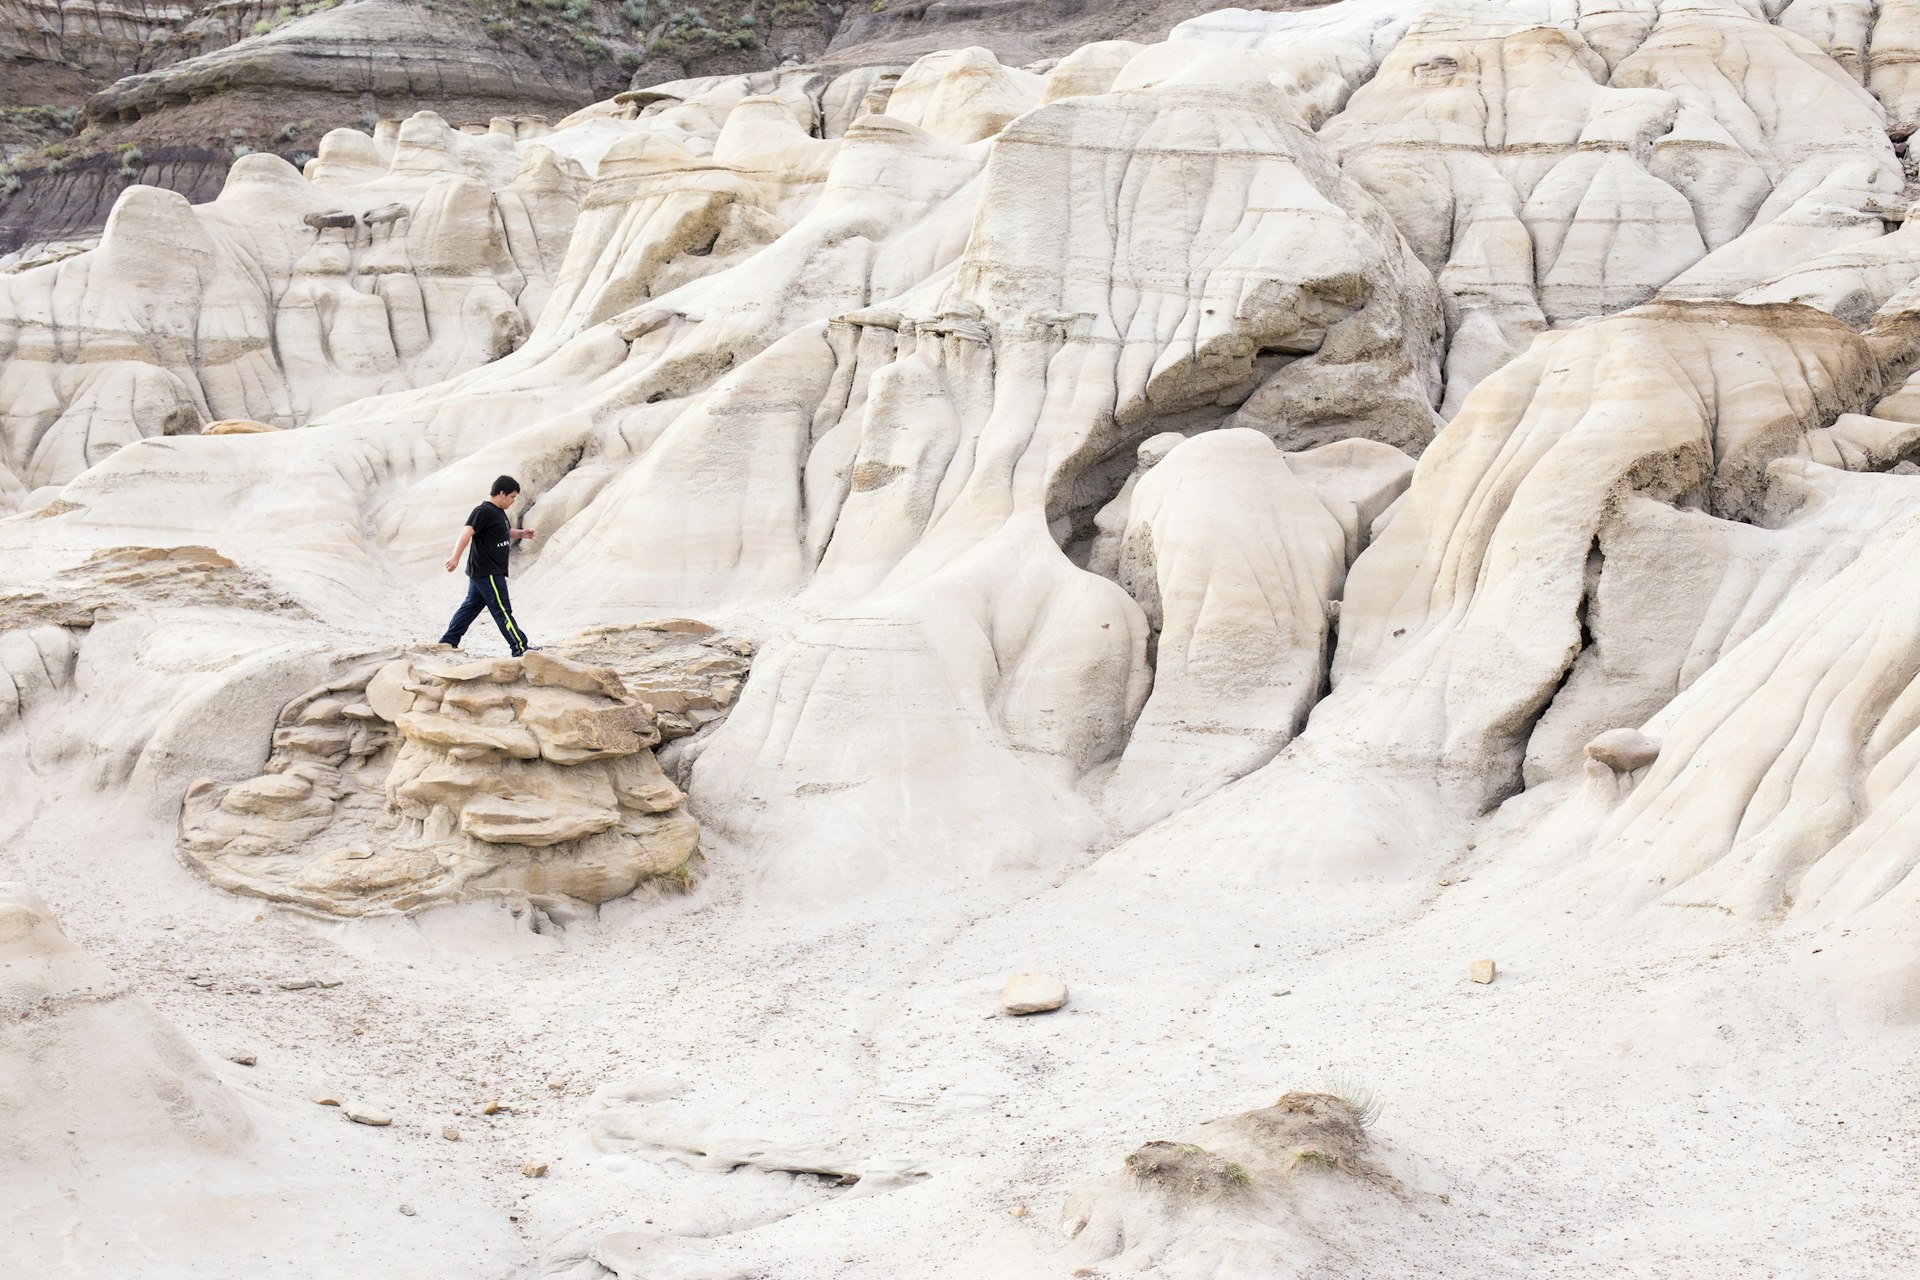 A teenager walks through a white rocky landscape